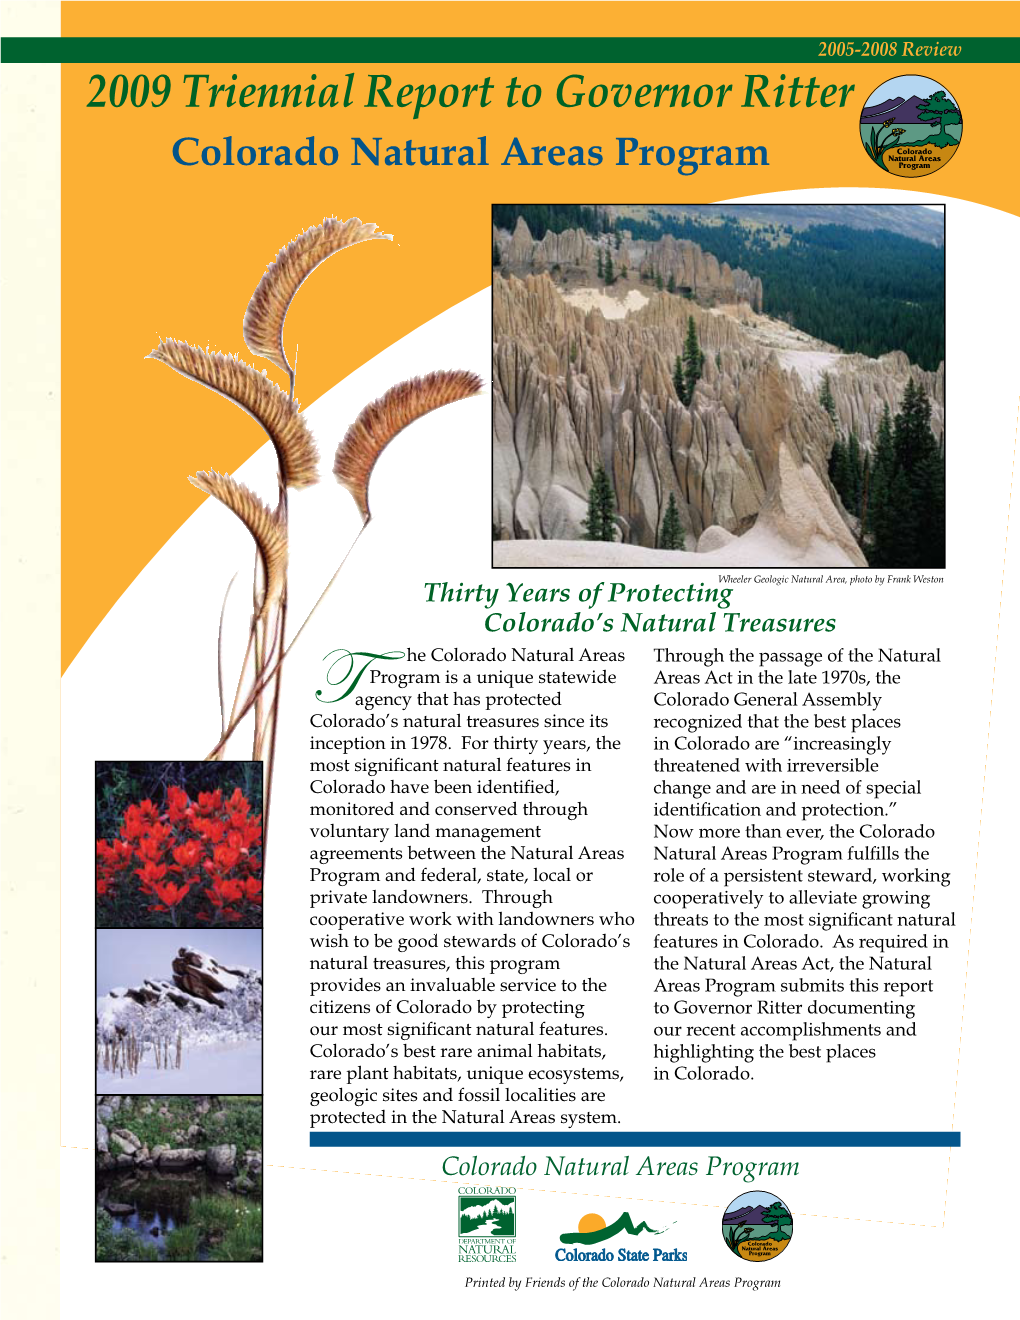 2009 Triennial Report to Governor Ritter Colorado Natural Areas Program